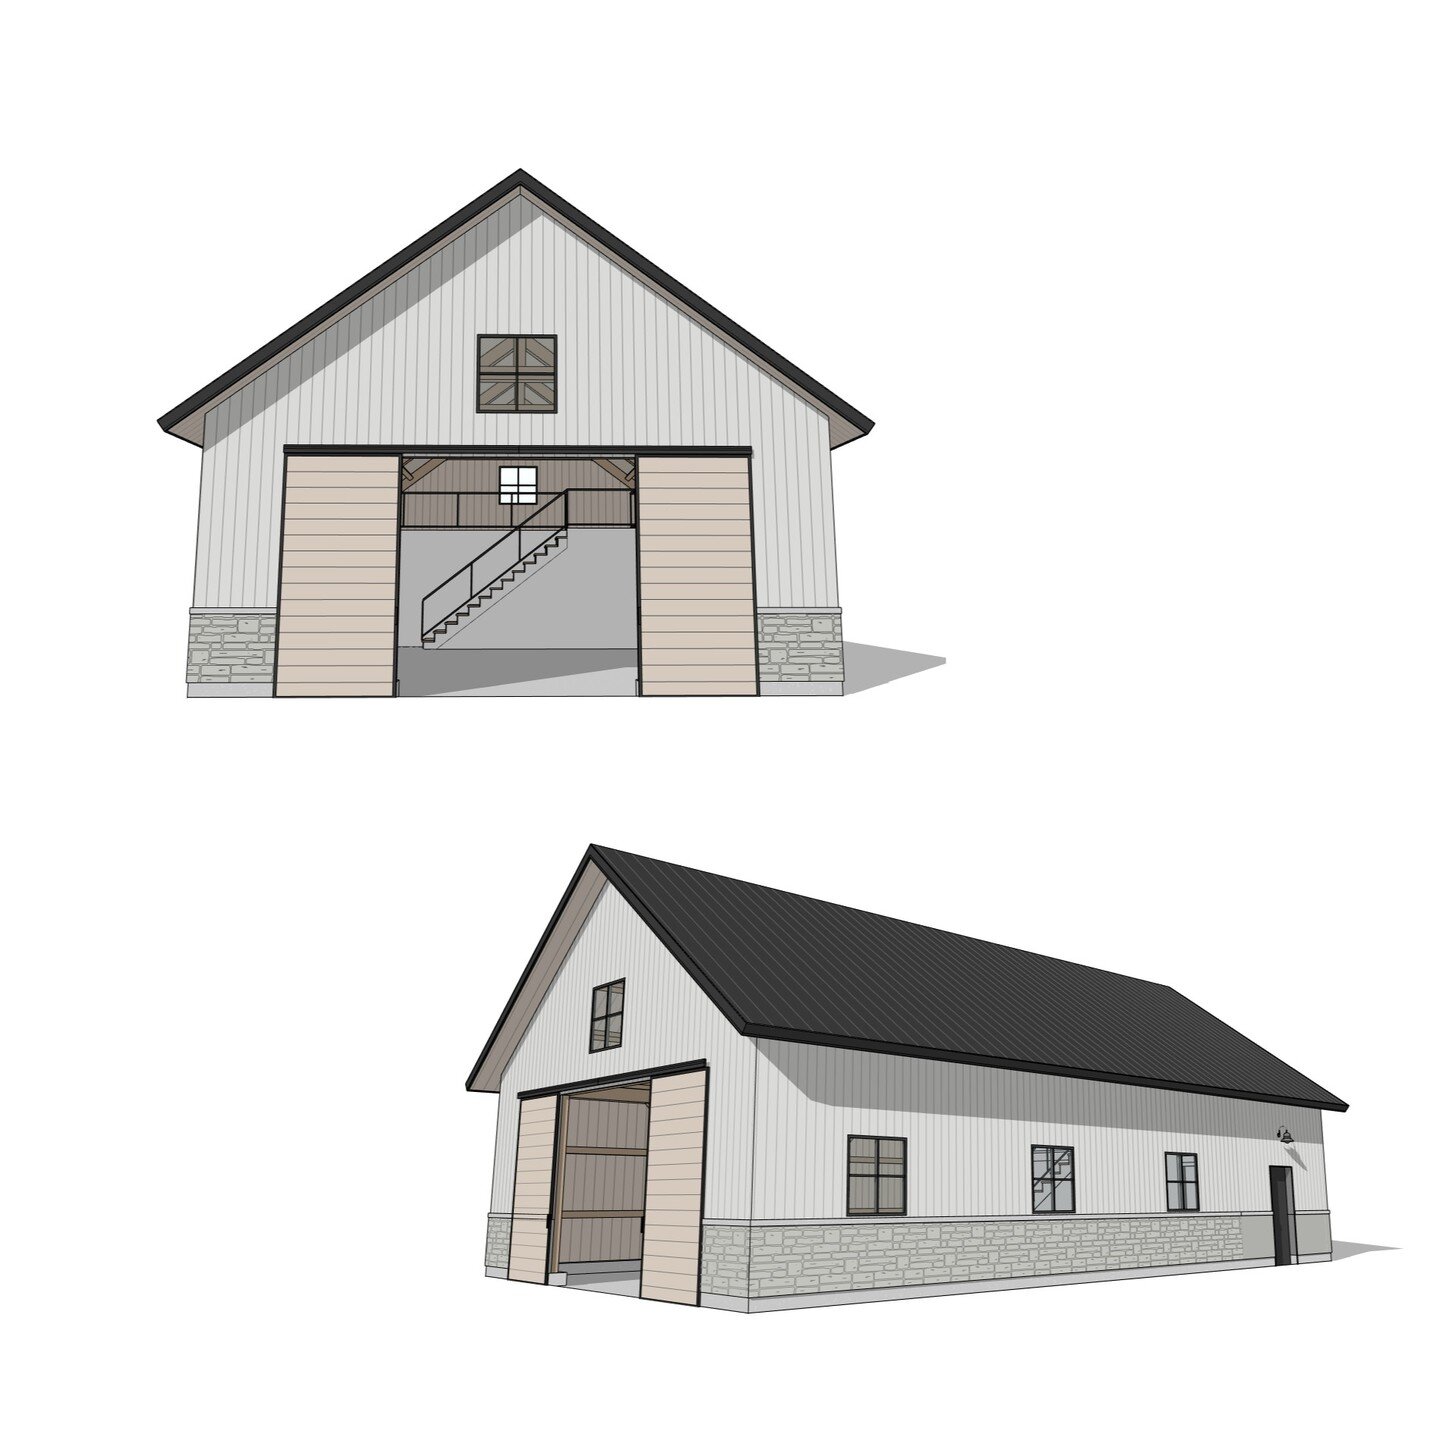 1 Storey Detached Garage with loft. #garage #accessorybuilding #workshop #loft #timber #stone #metal #barn #architecture #revit #perspective #aja #adamjodoinarchitectural #design